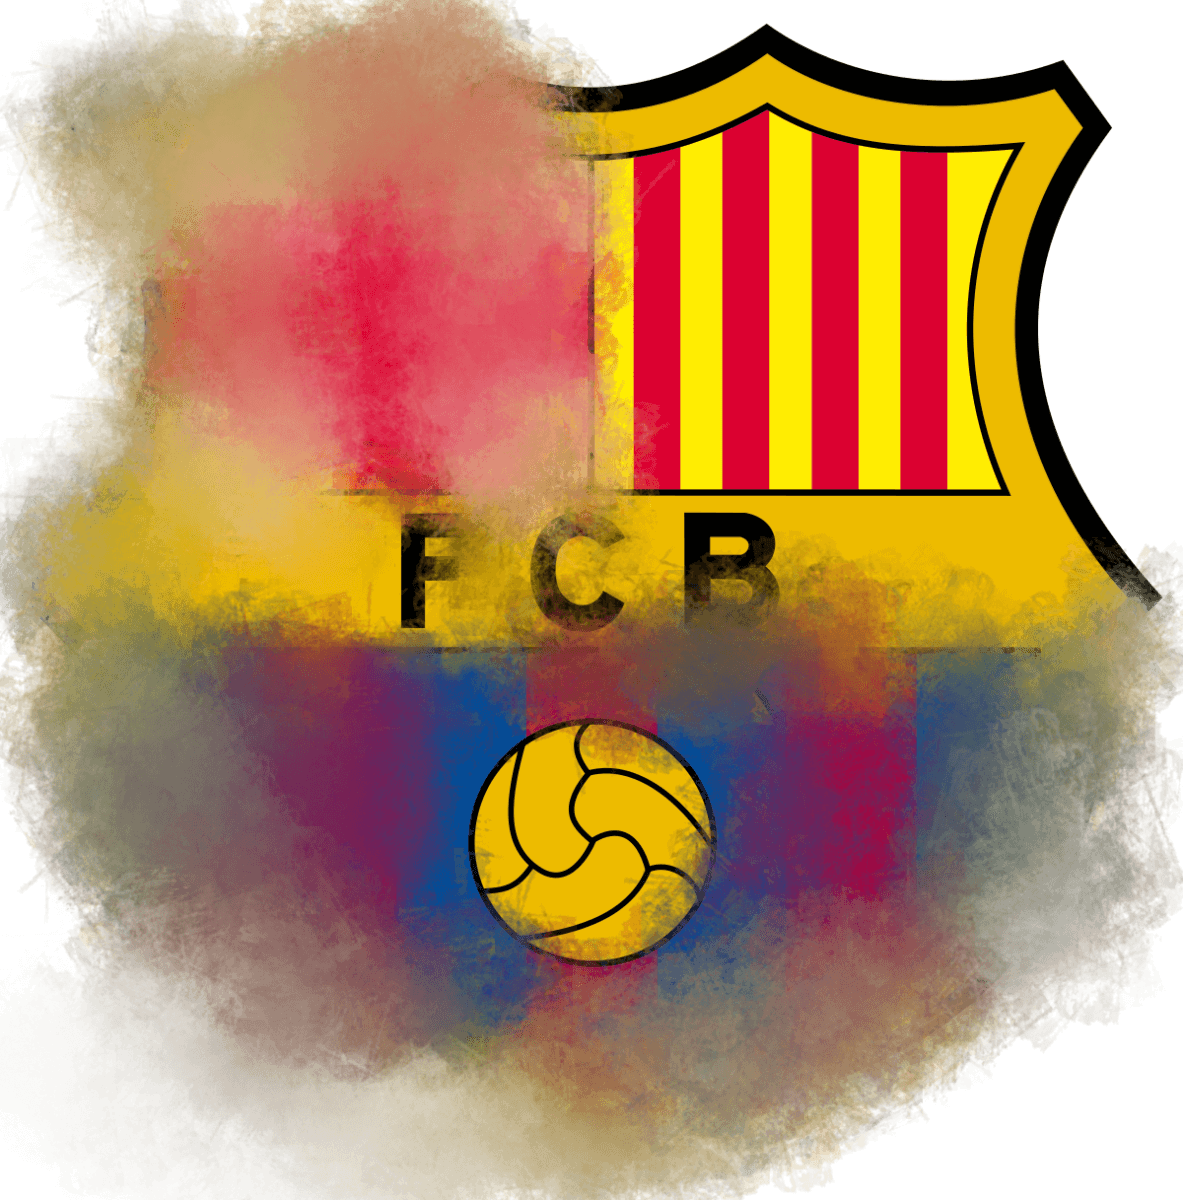 Blurred Photograph of the Barcelona Football club logo